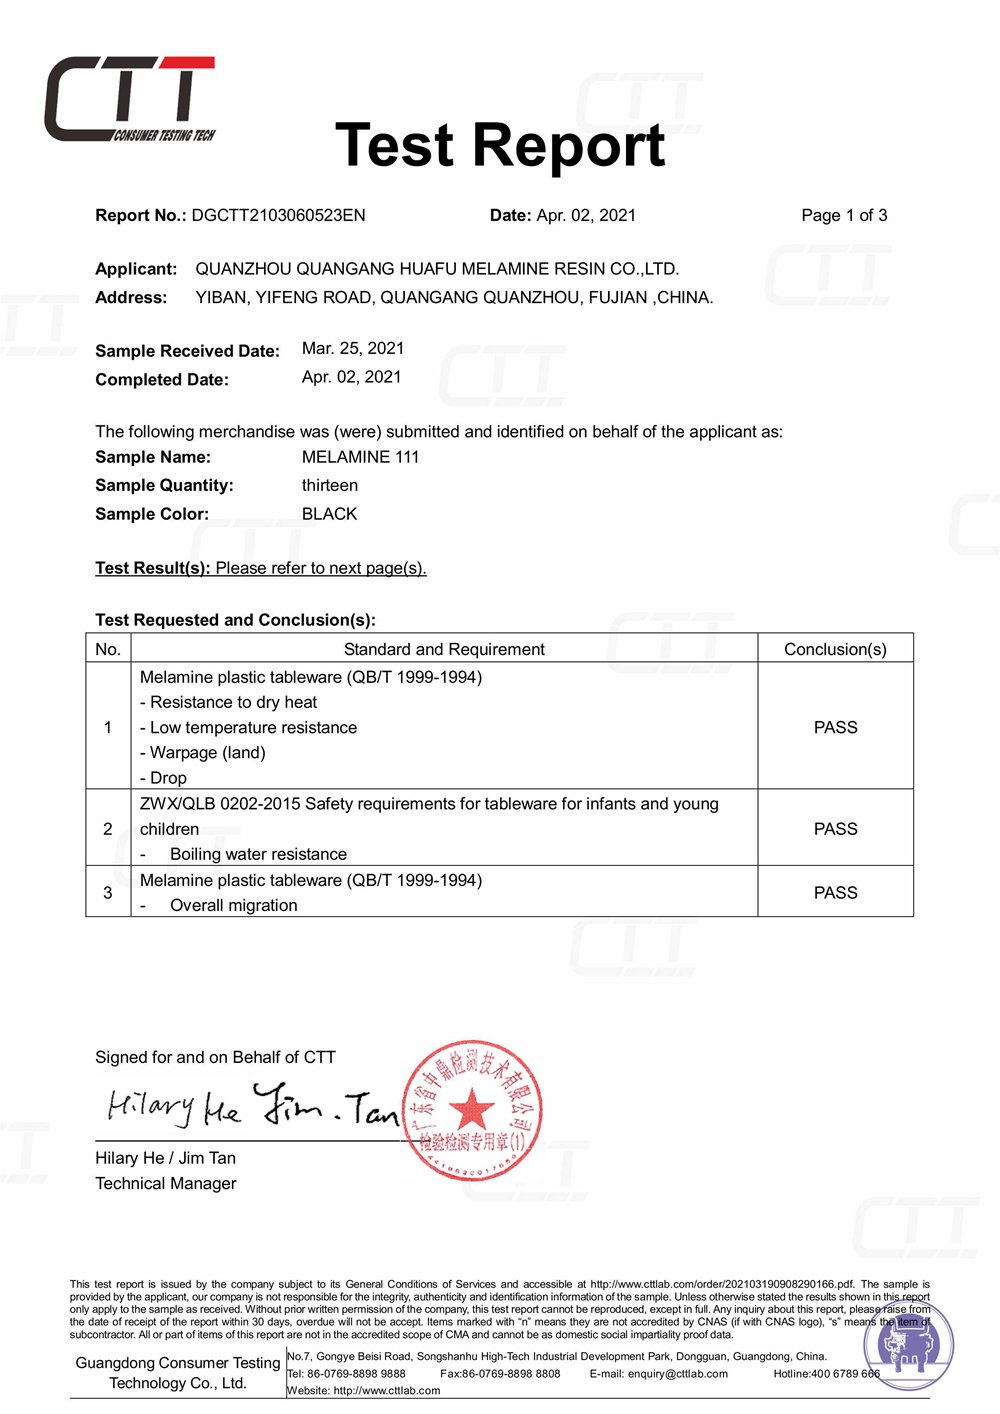 Huafu Chemicals: сертификат CTT в 2021 году